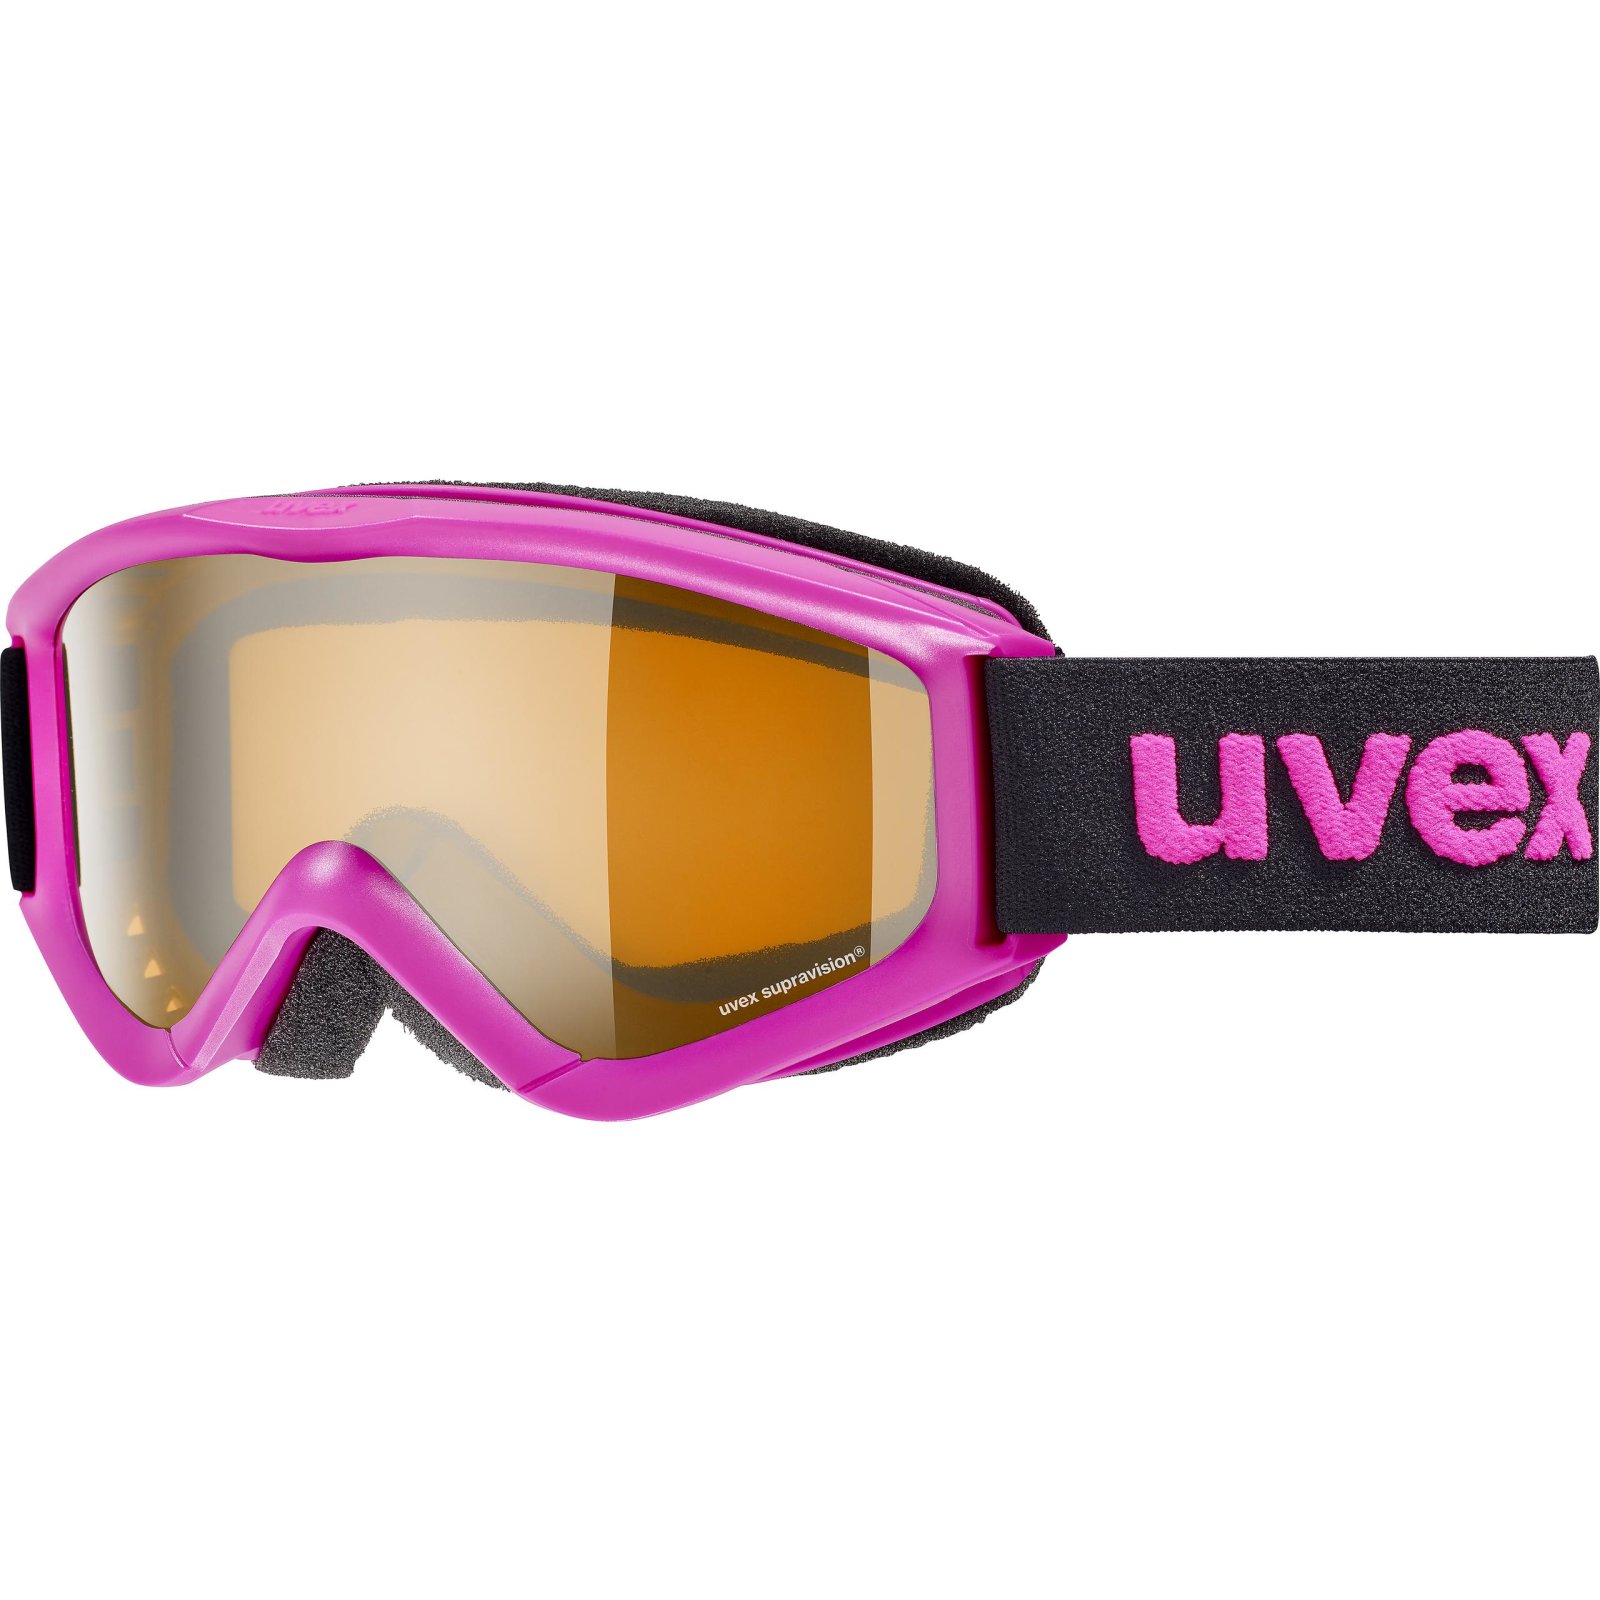 Detské lyžiarske okuliare UVEX speedy pro 20/21